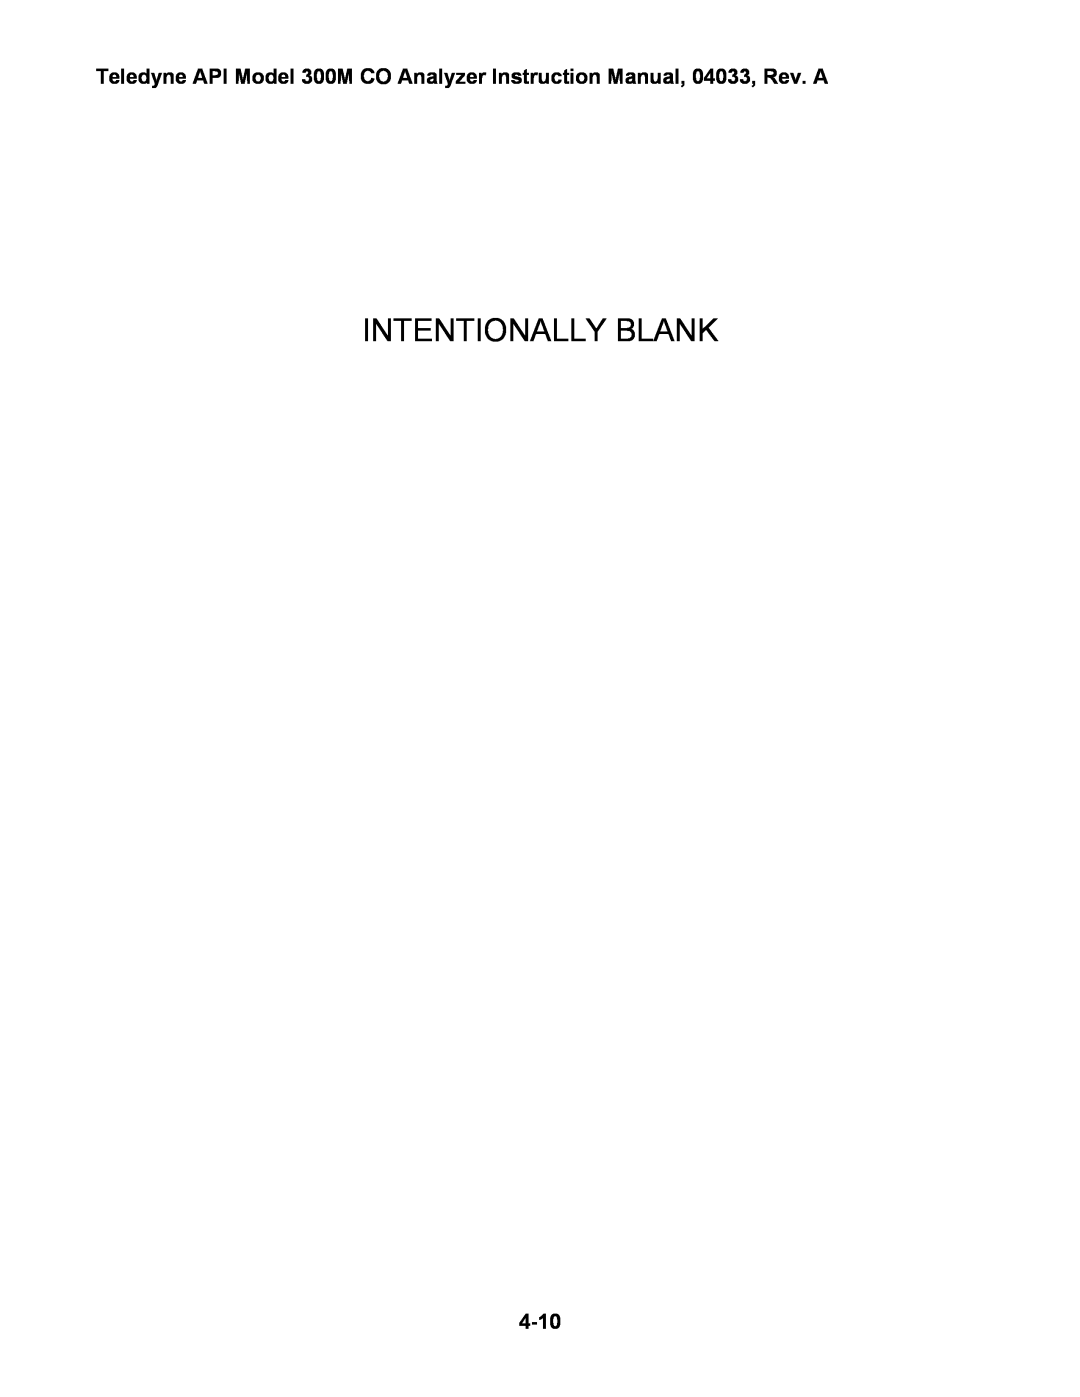 Teledyne 300M instruction manual 4-10, Intentionally Blank 